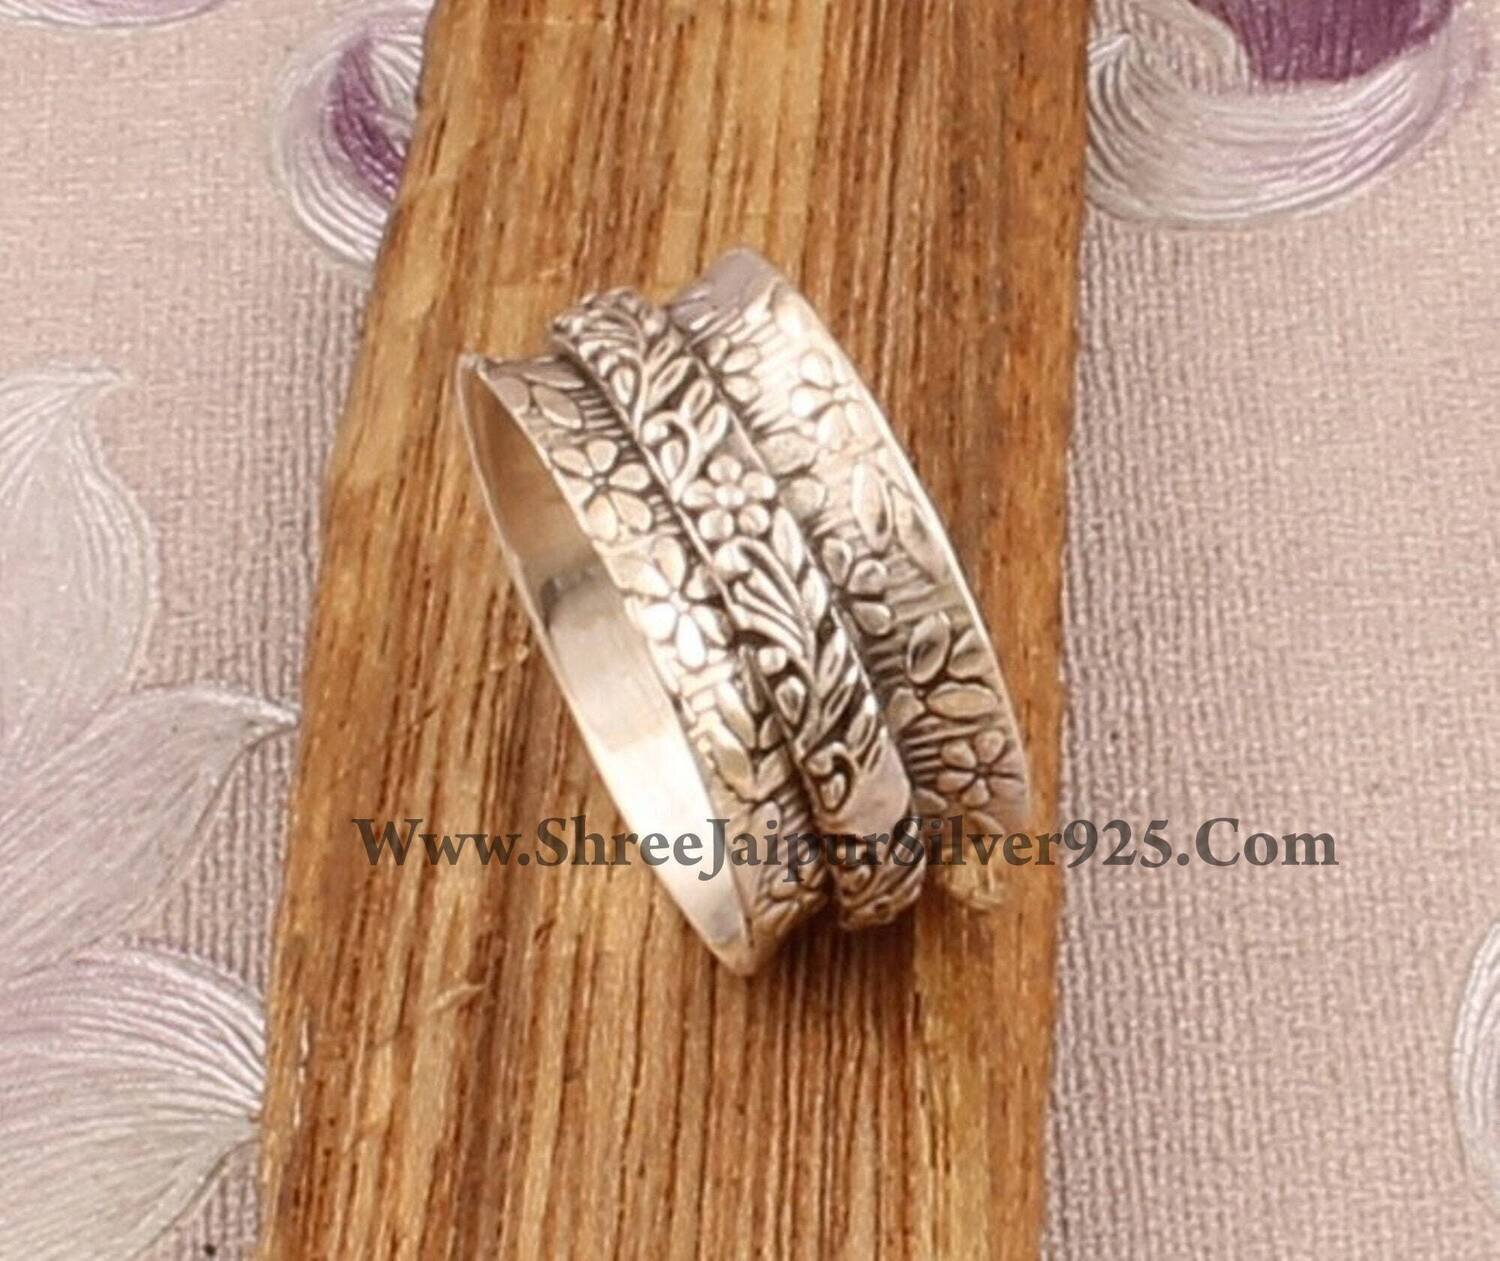 925 Sterling Silver Designer Carved Flower Leaves Spinner Ring, Handmade Silver Meditation Ring, Boho Worry Rings, Valentine's Day Gift idea